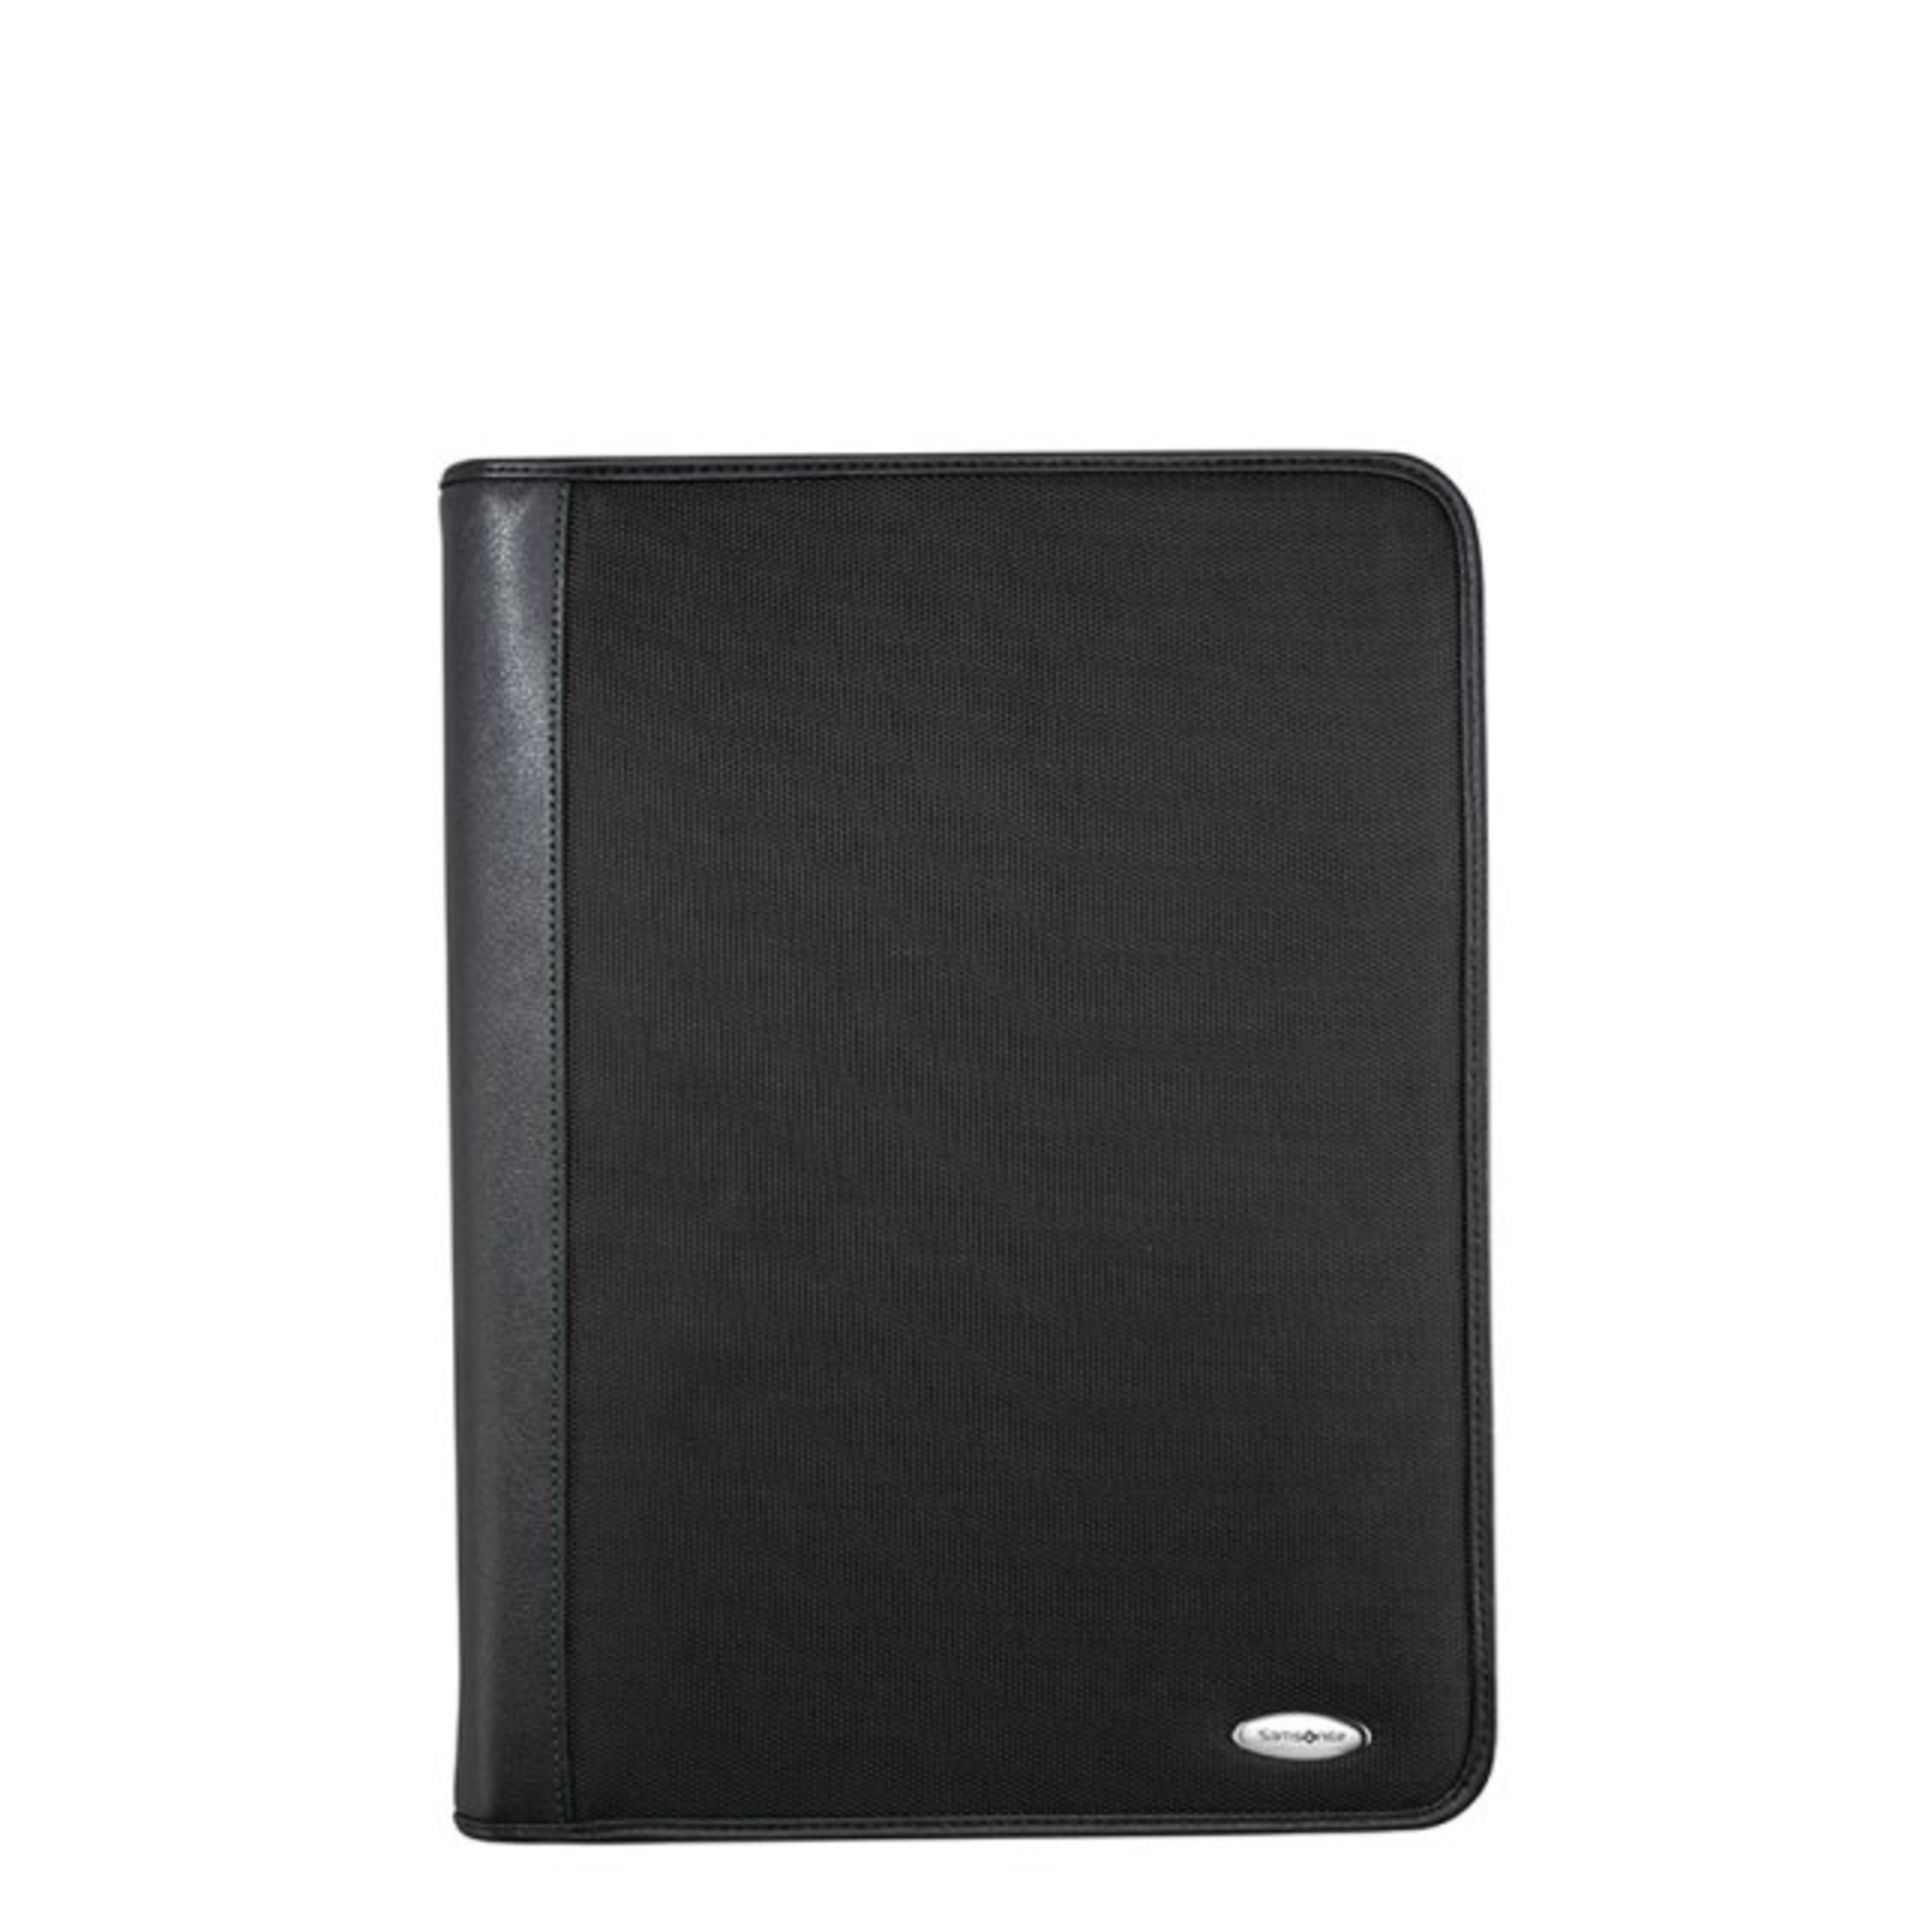 V Brand New Samsonite Canvas & Black Leather Executive Folder With-Pen Pocket-Card Pockets-Writing